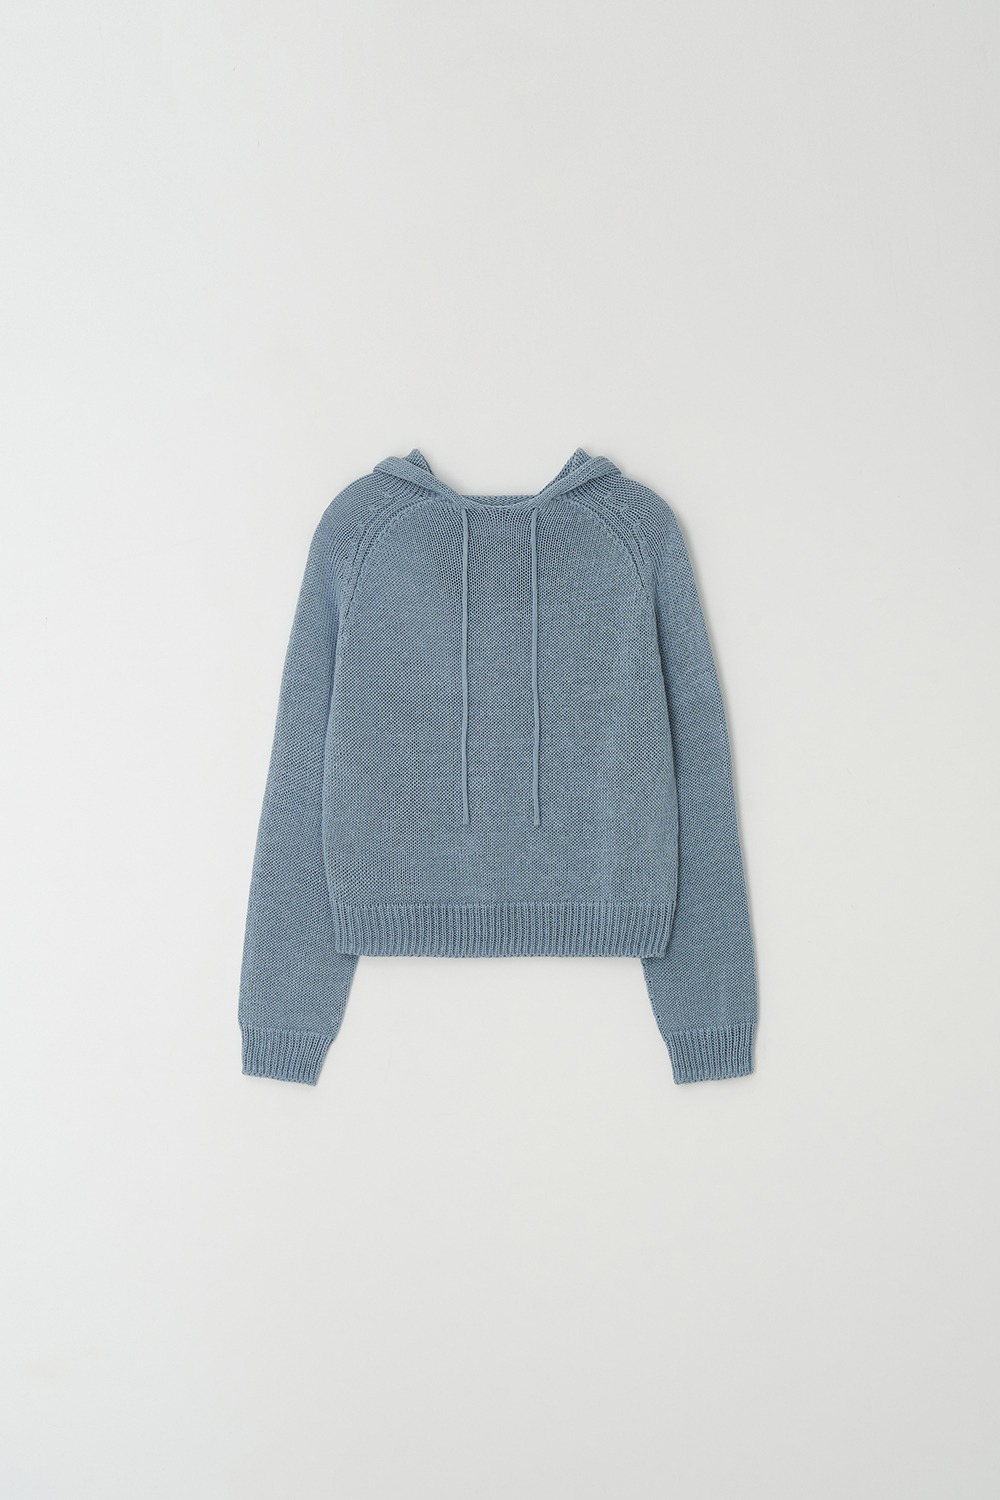 Whole garment hood knit (Skyblue)